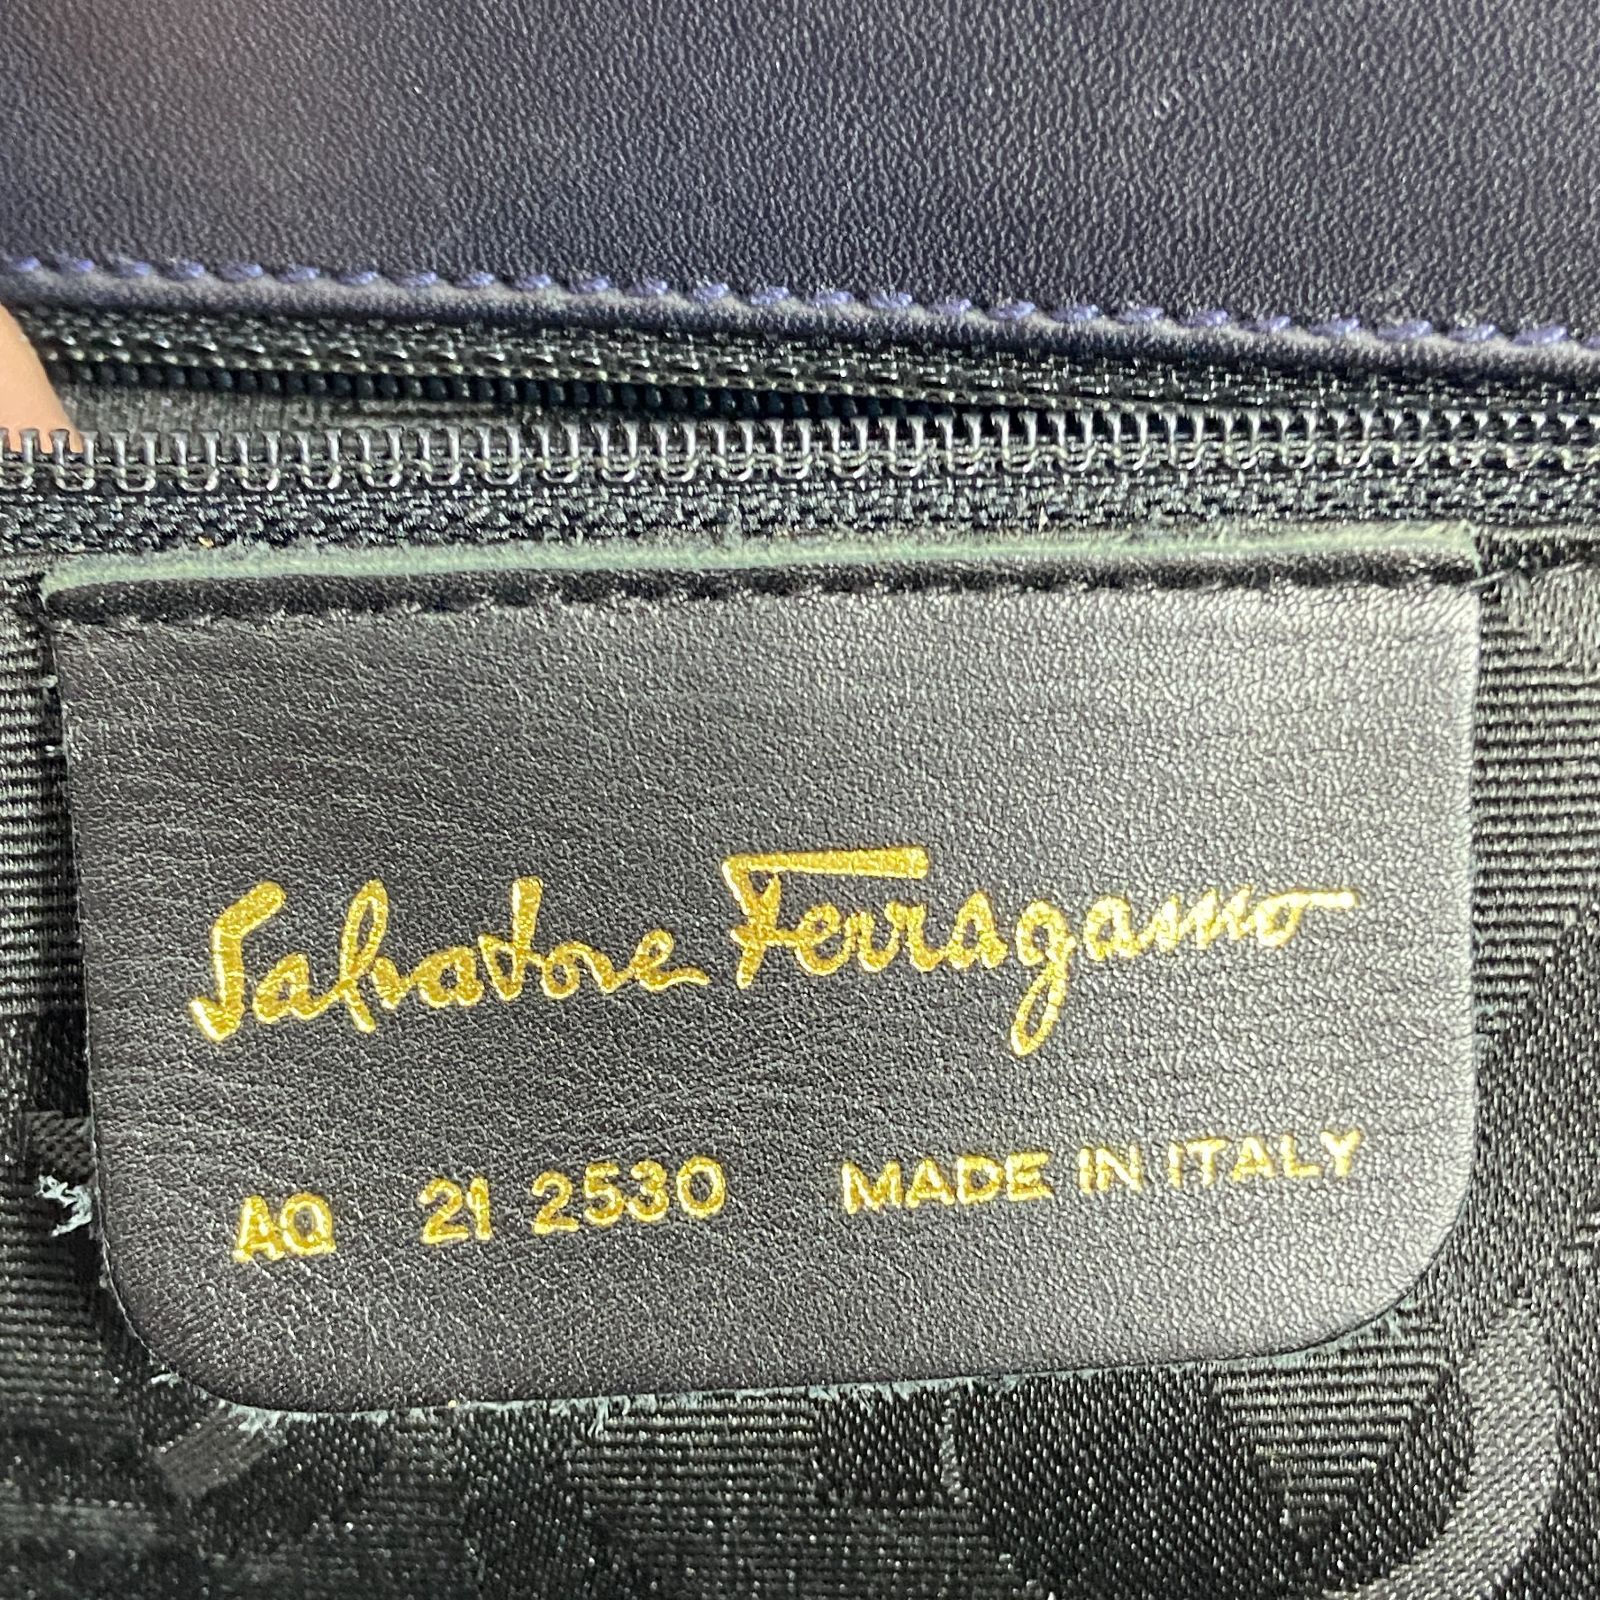 【Salvatore Ferragamo】サルヴァトーレフェラガモ ヴァラ AQ21 2530 カーフ 紺 レディース トートバッグ